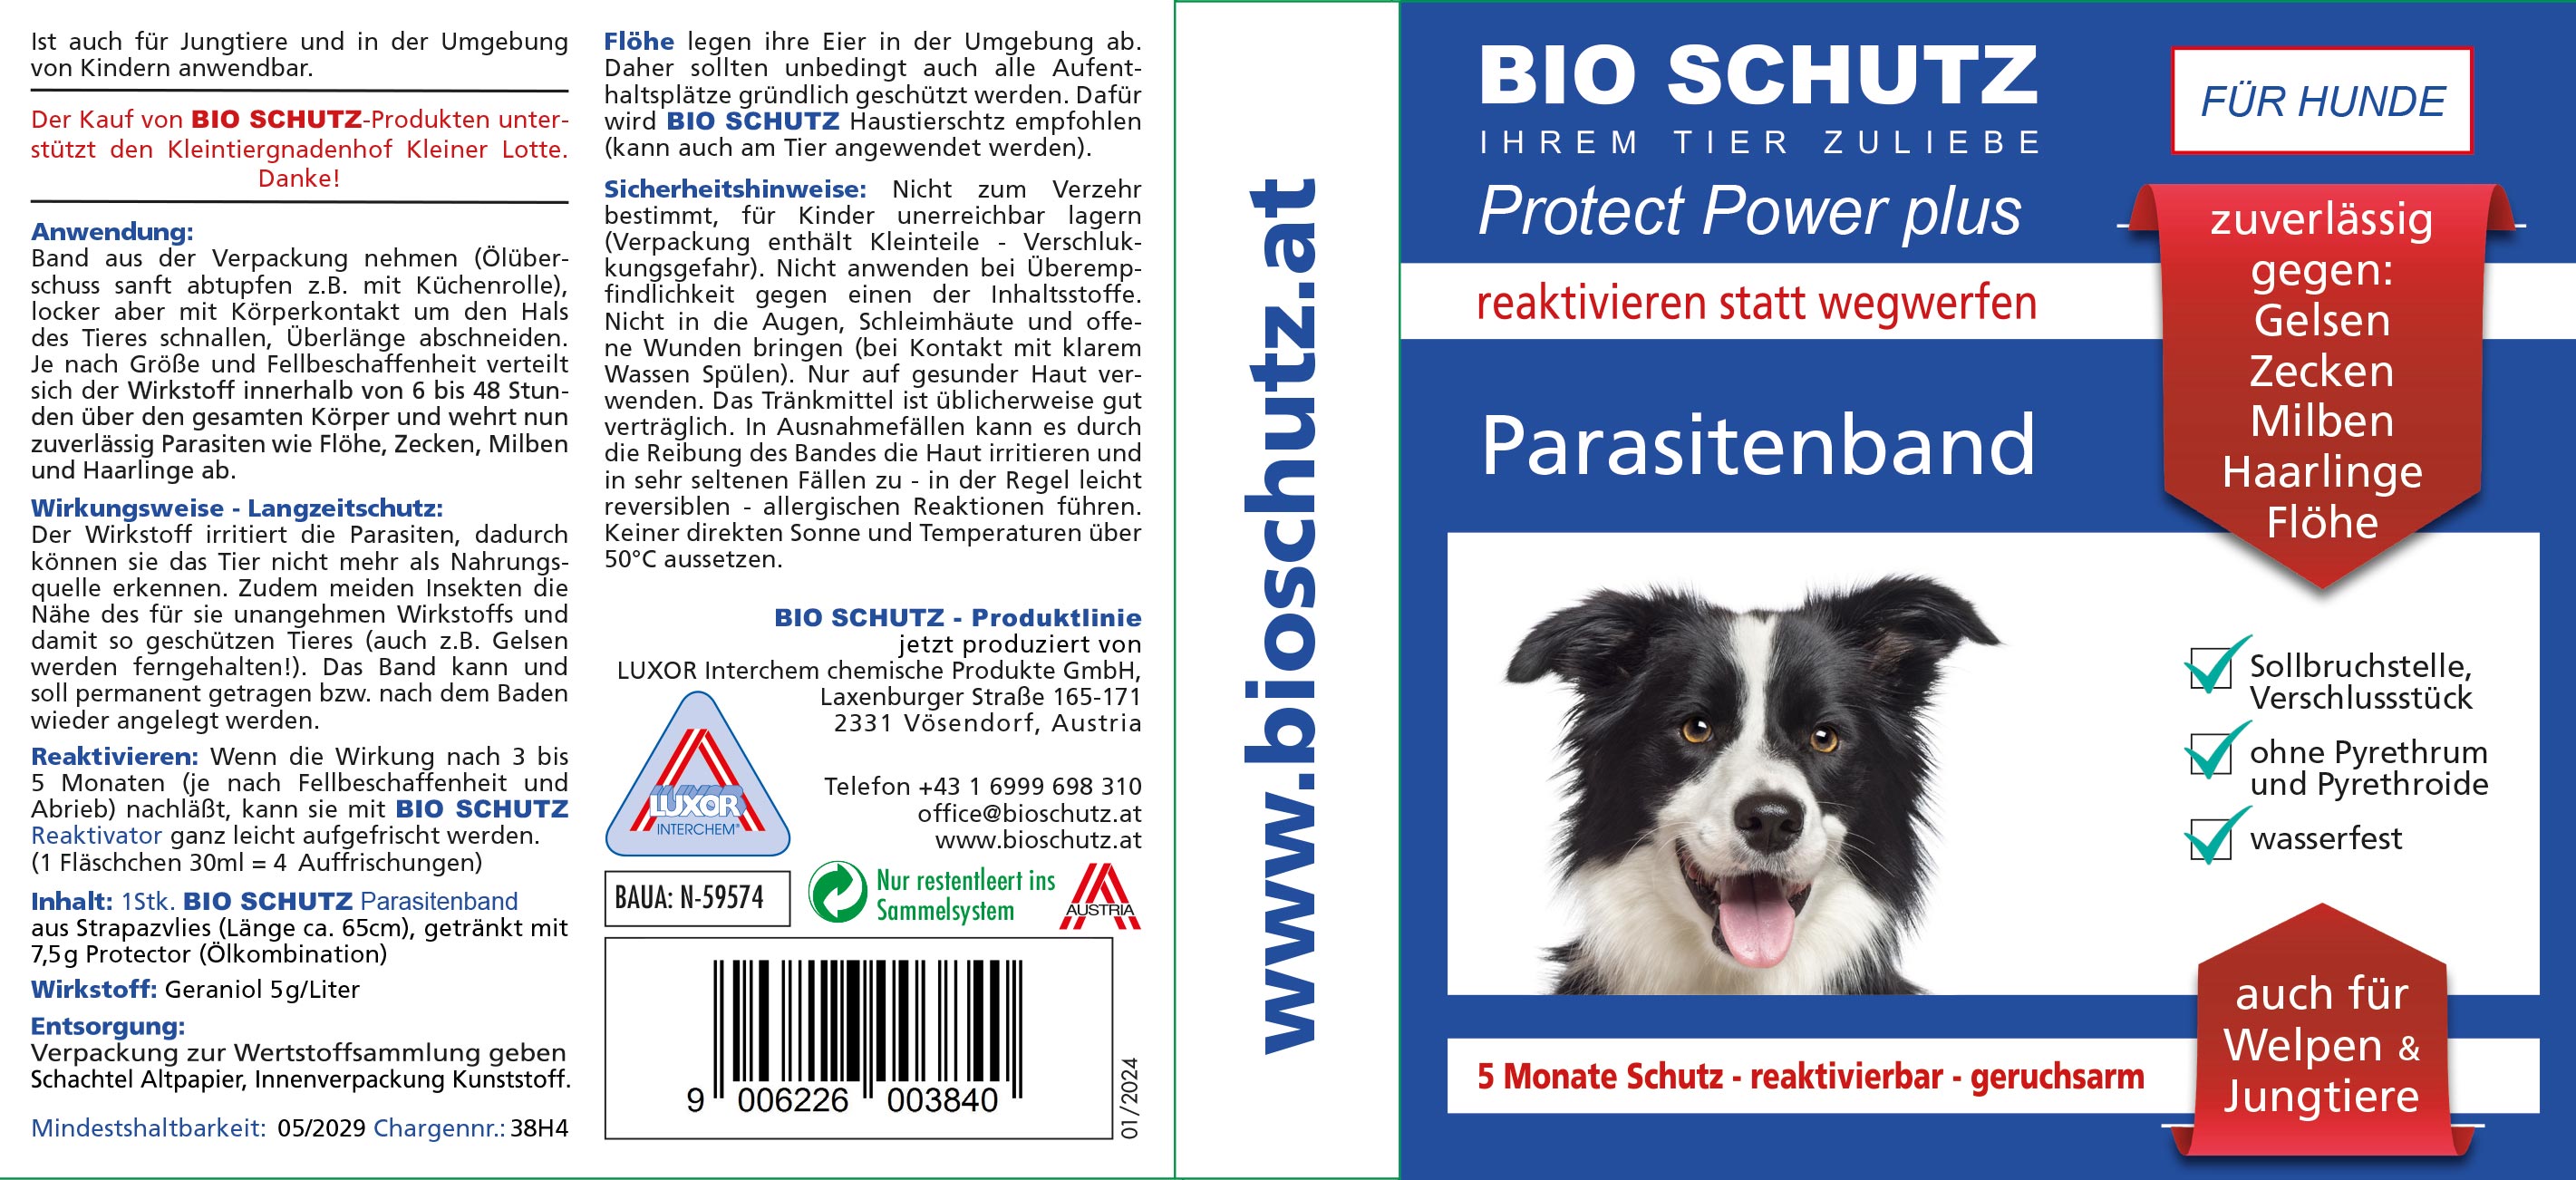 BIO SCHUTZ Parasitenband Protect Power Plus Hund Art.Nr. 384, 388